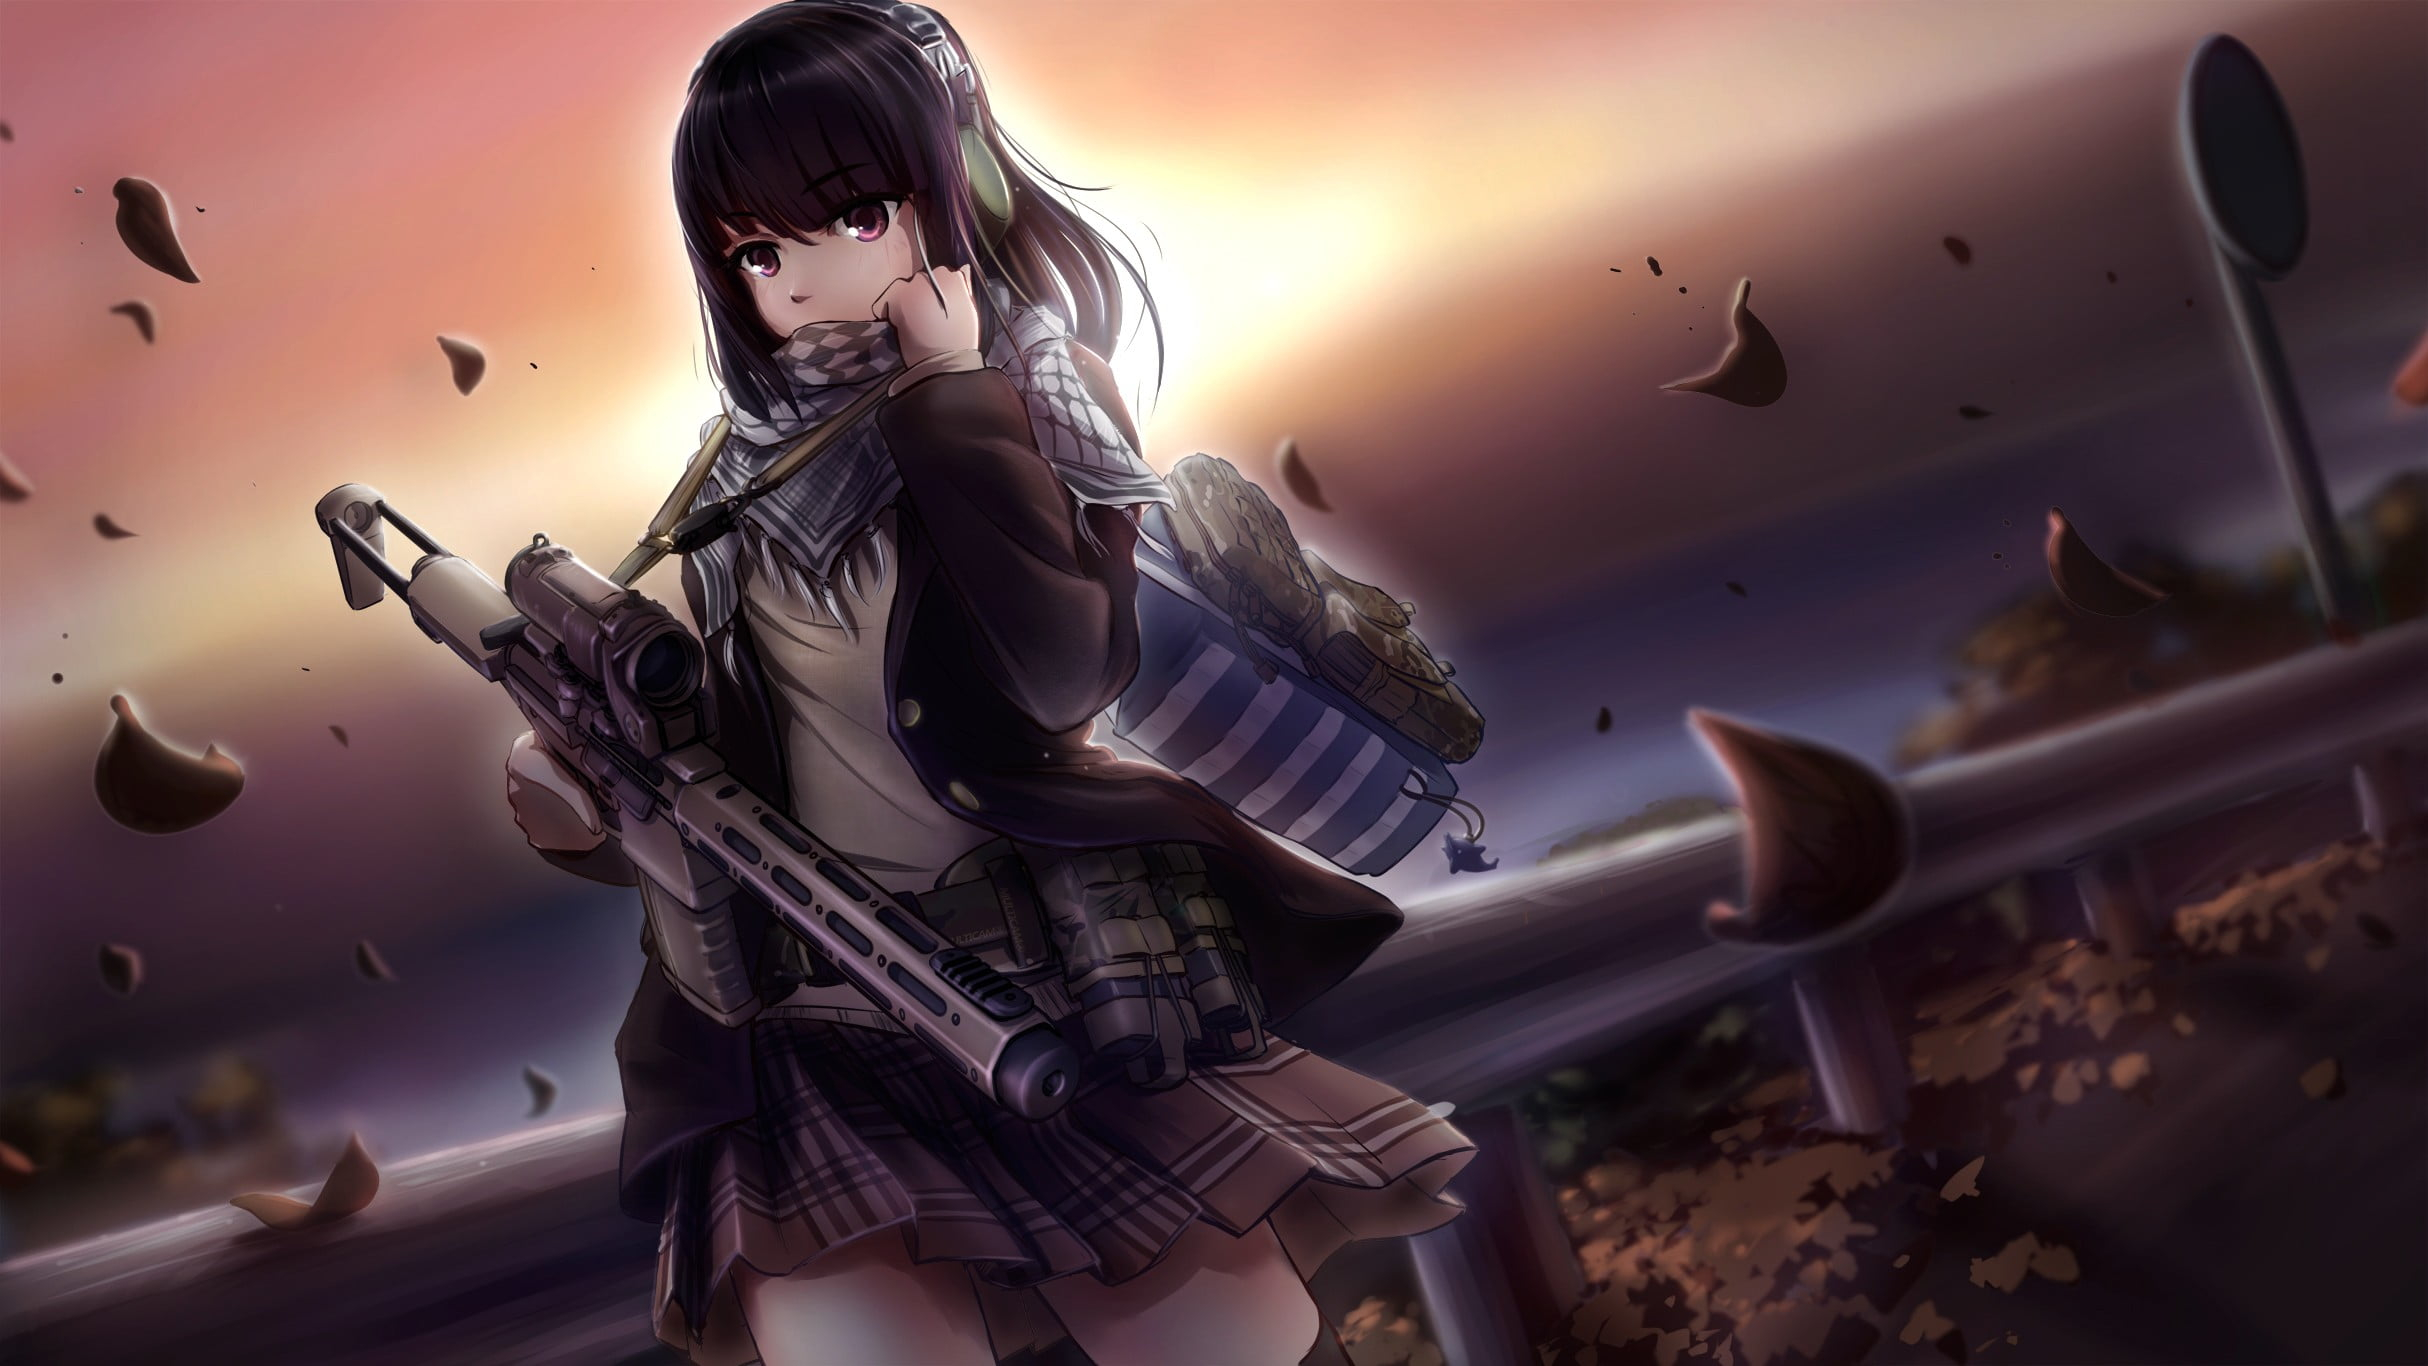 Woman holding gun anime character wallpaper, woman Anime character holding gun